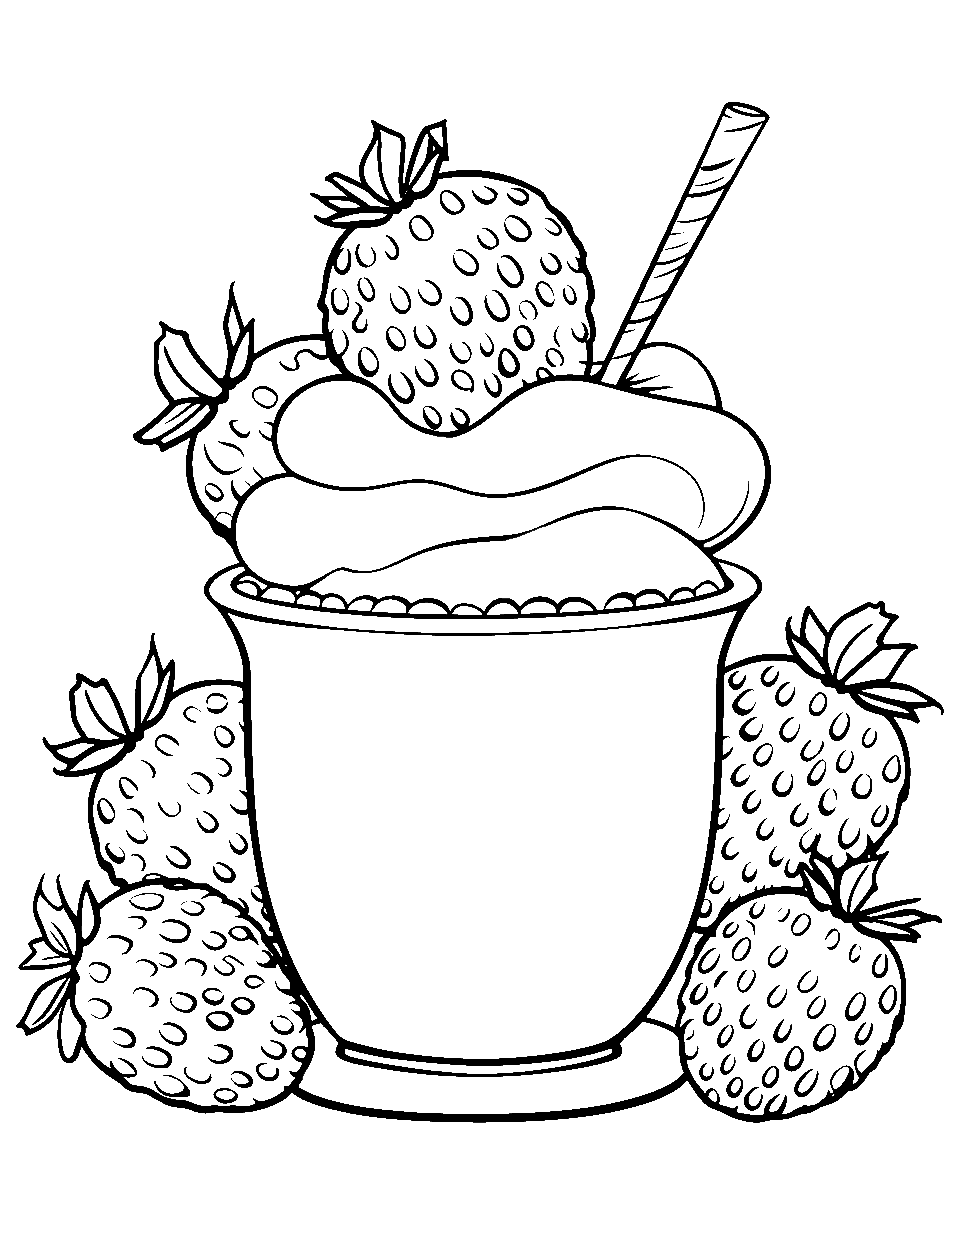 Yummy Strawberry Yogurt Coloring Page - A cup of strawberry yogurt with fruits.